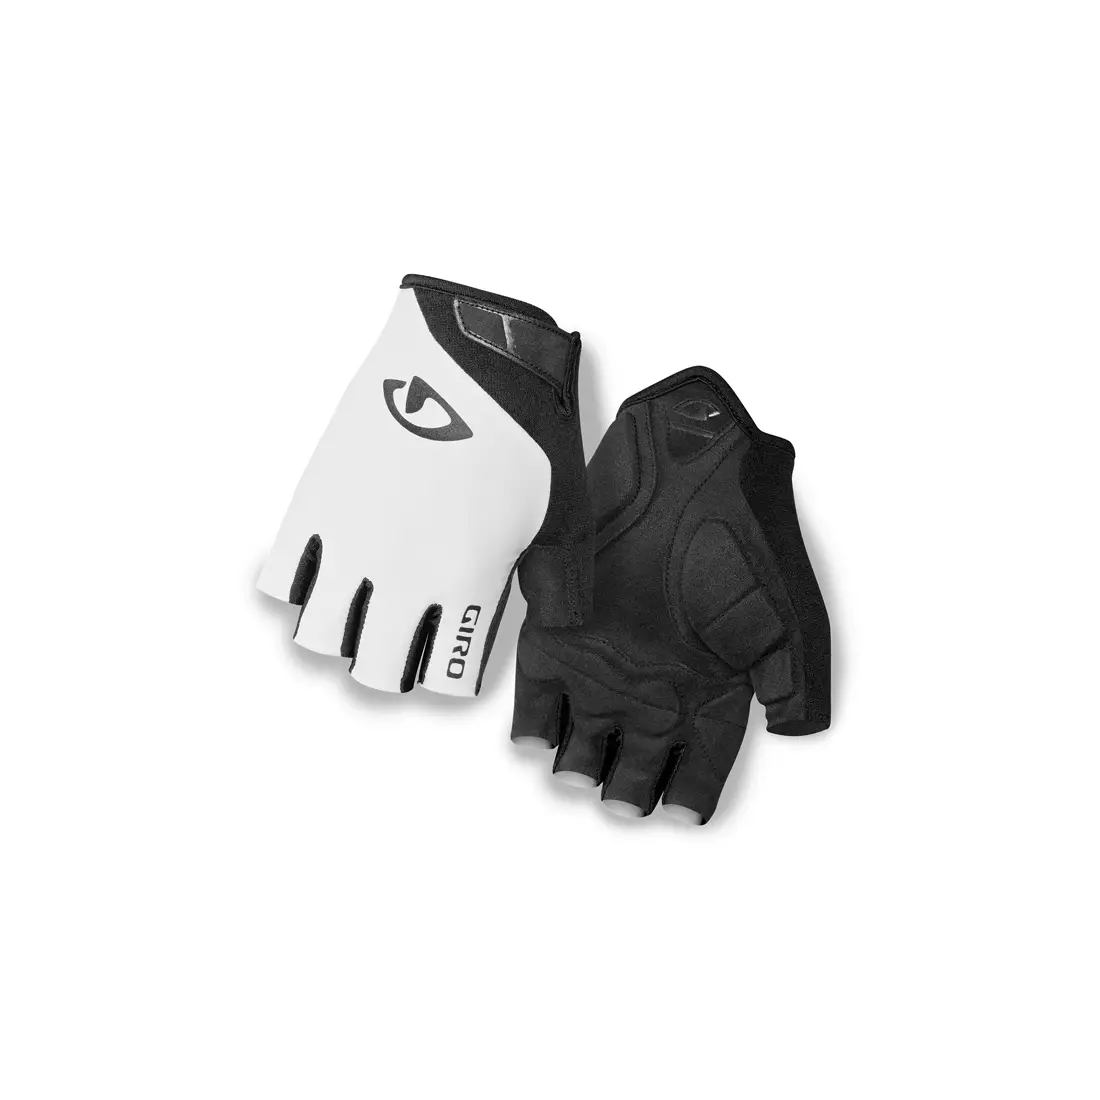 GIRO JAG'ETTE women's bicycle gloves, black and white